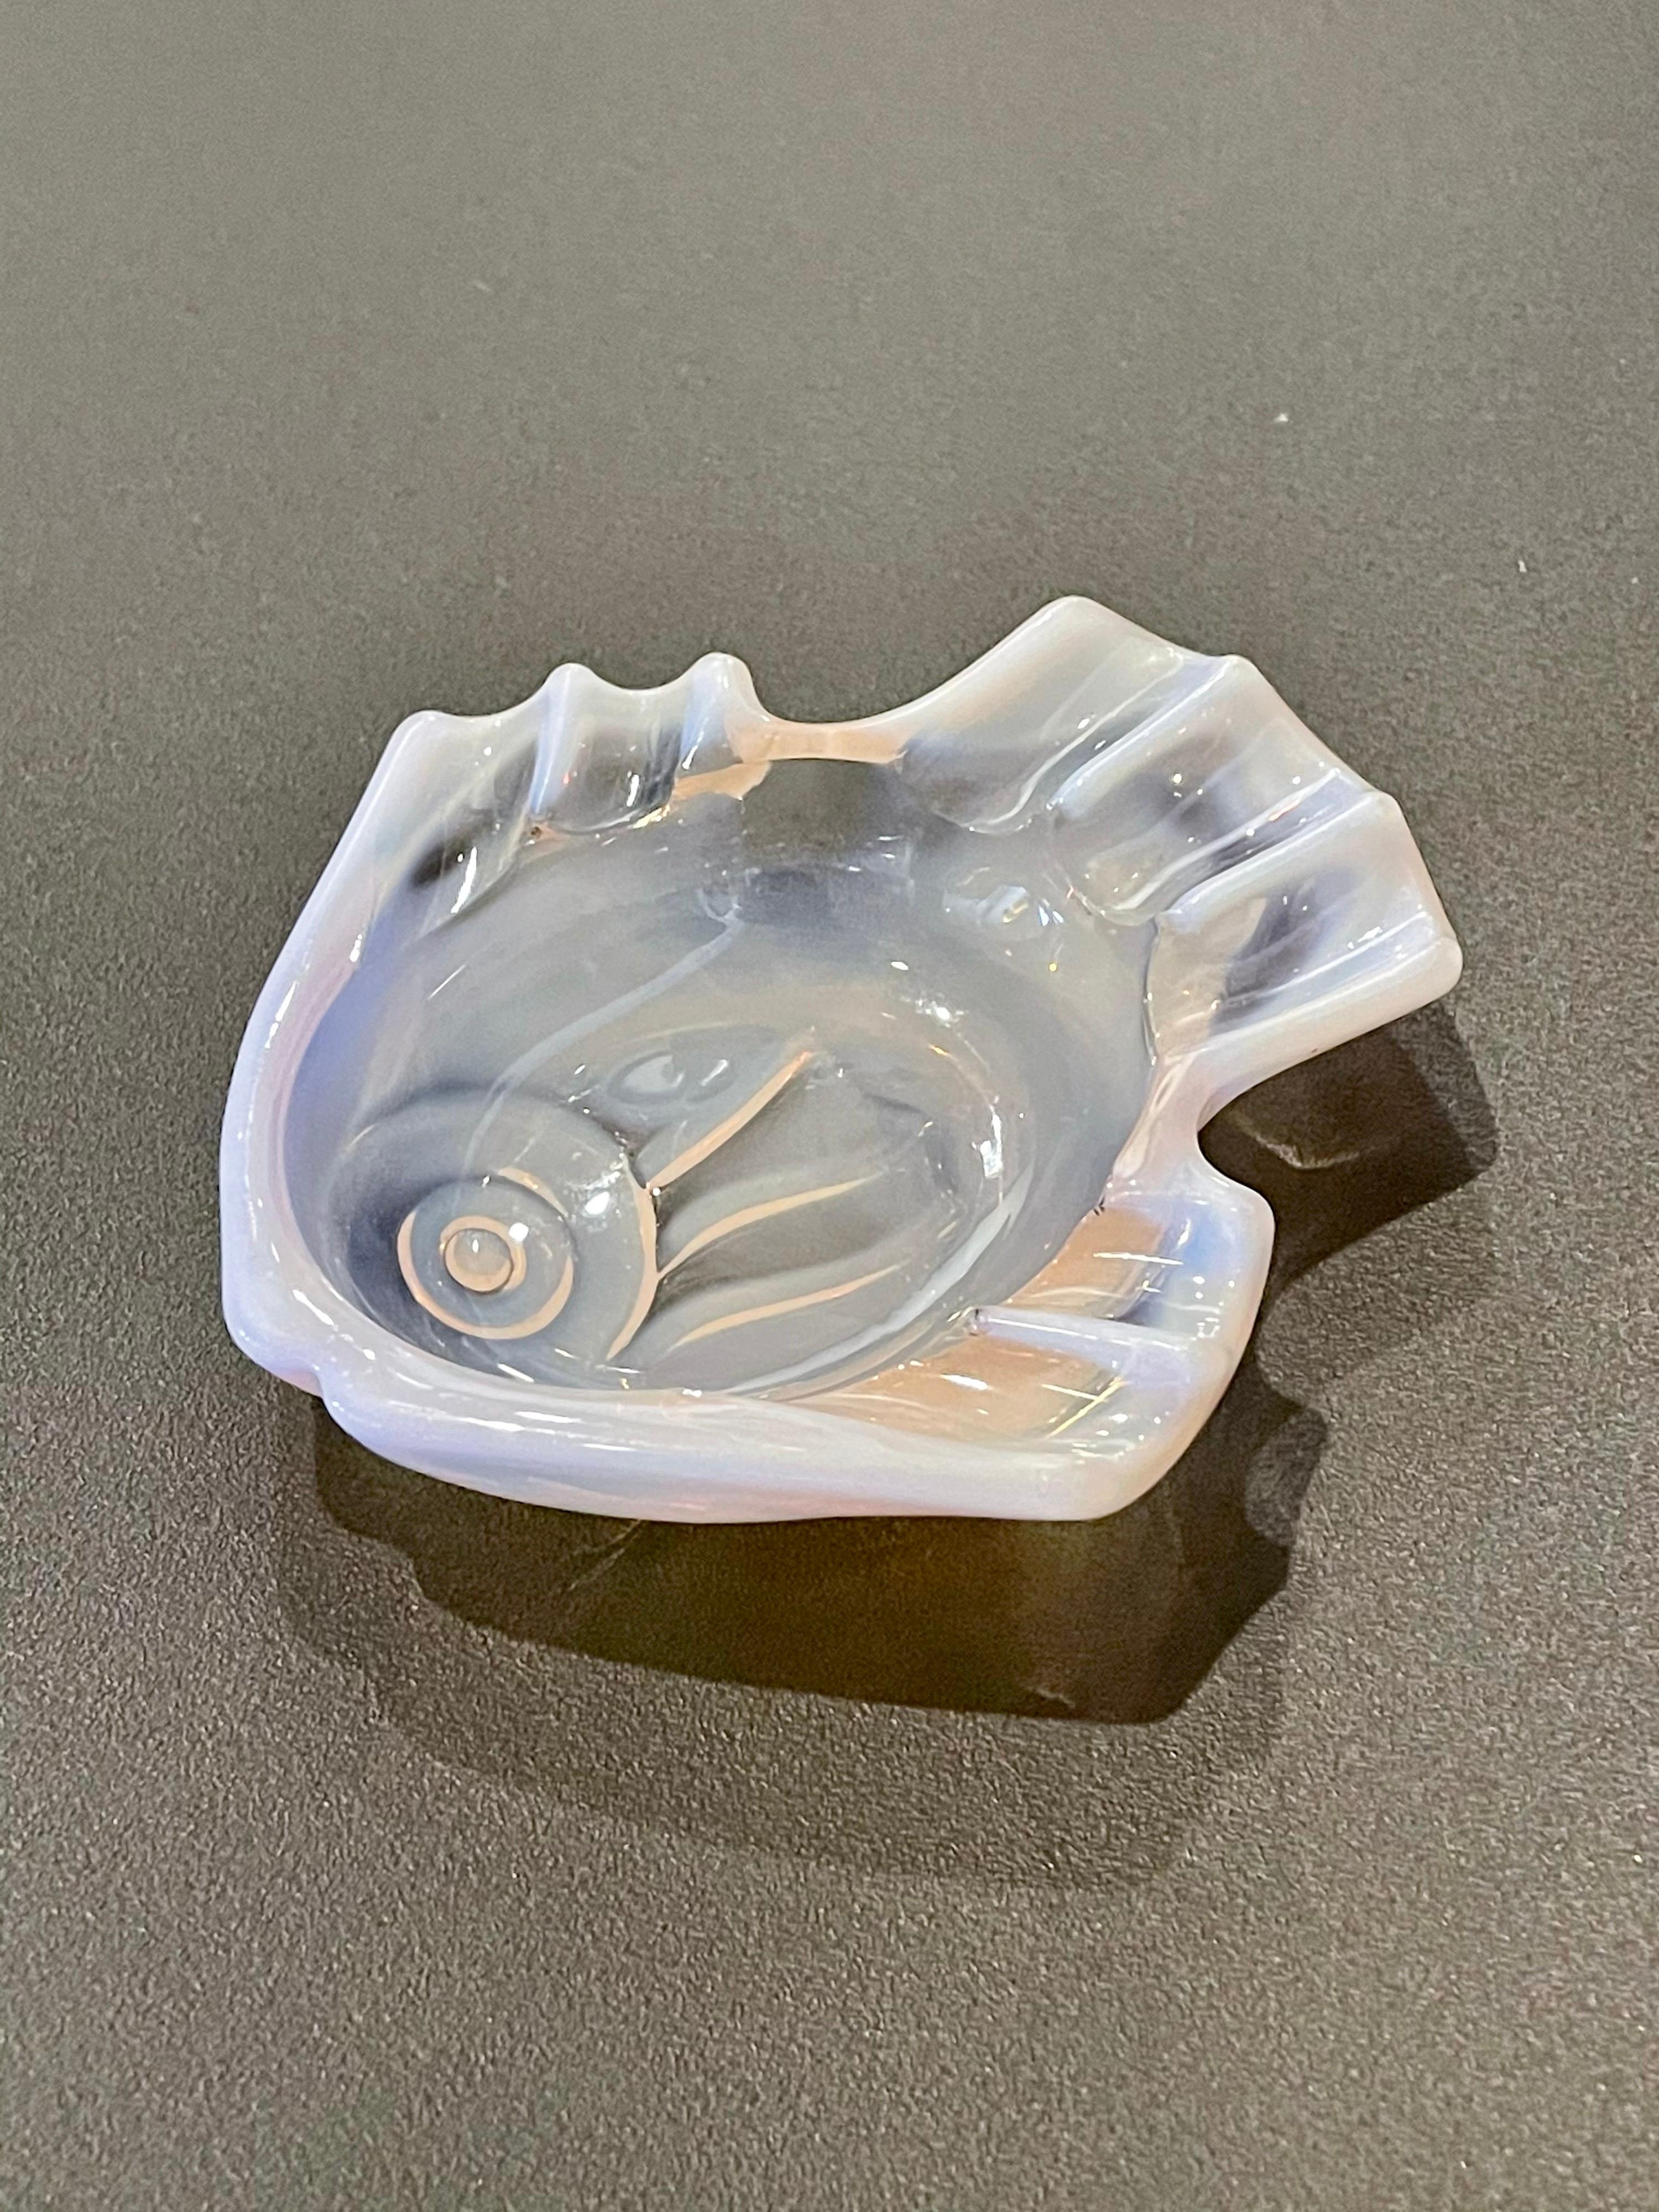 A unique rare vaseline uranium glass ashtray, in white color no chips or cracks like-new condition.